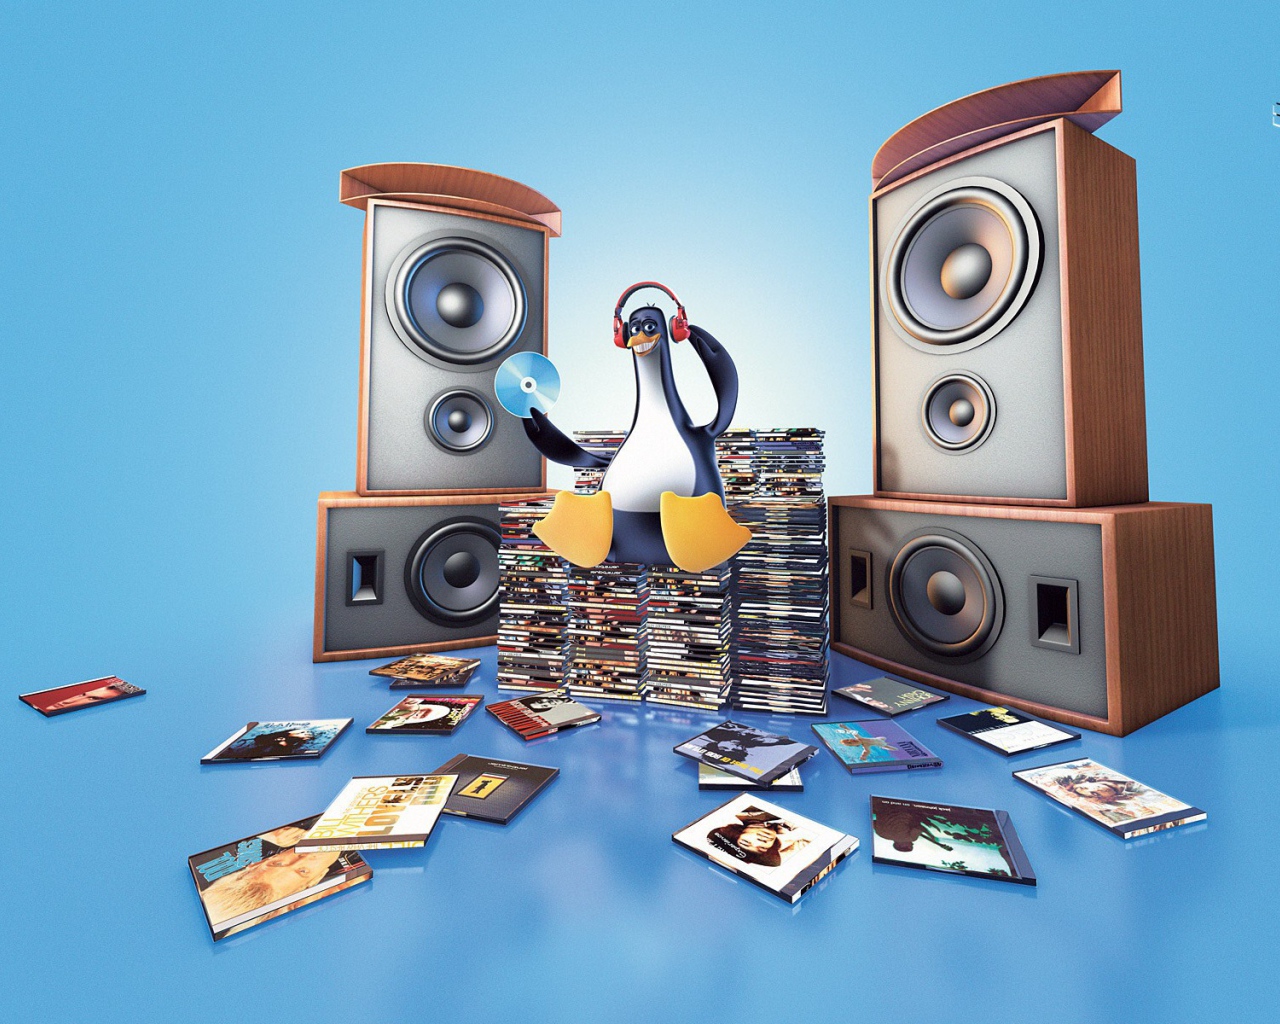 Пингвин слушает музыку